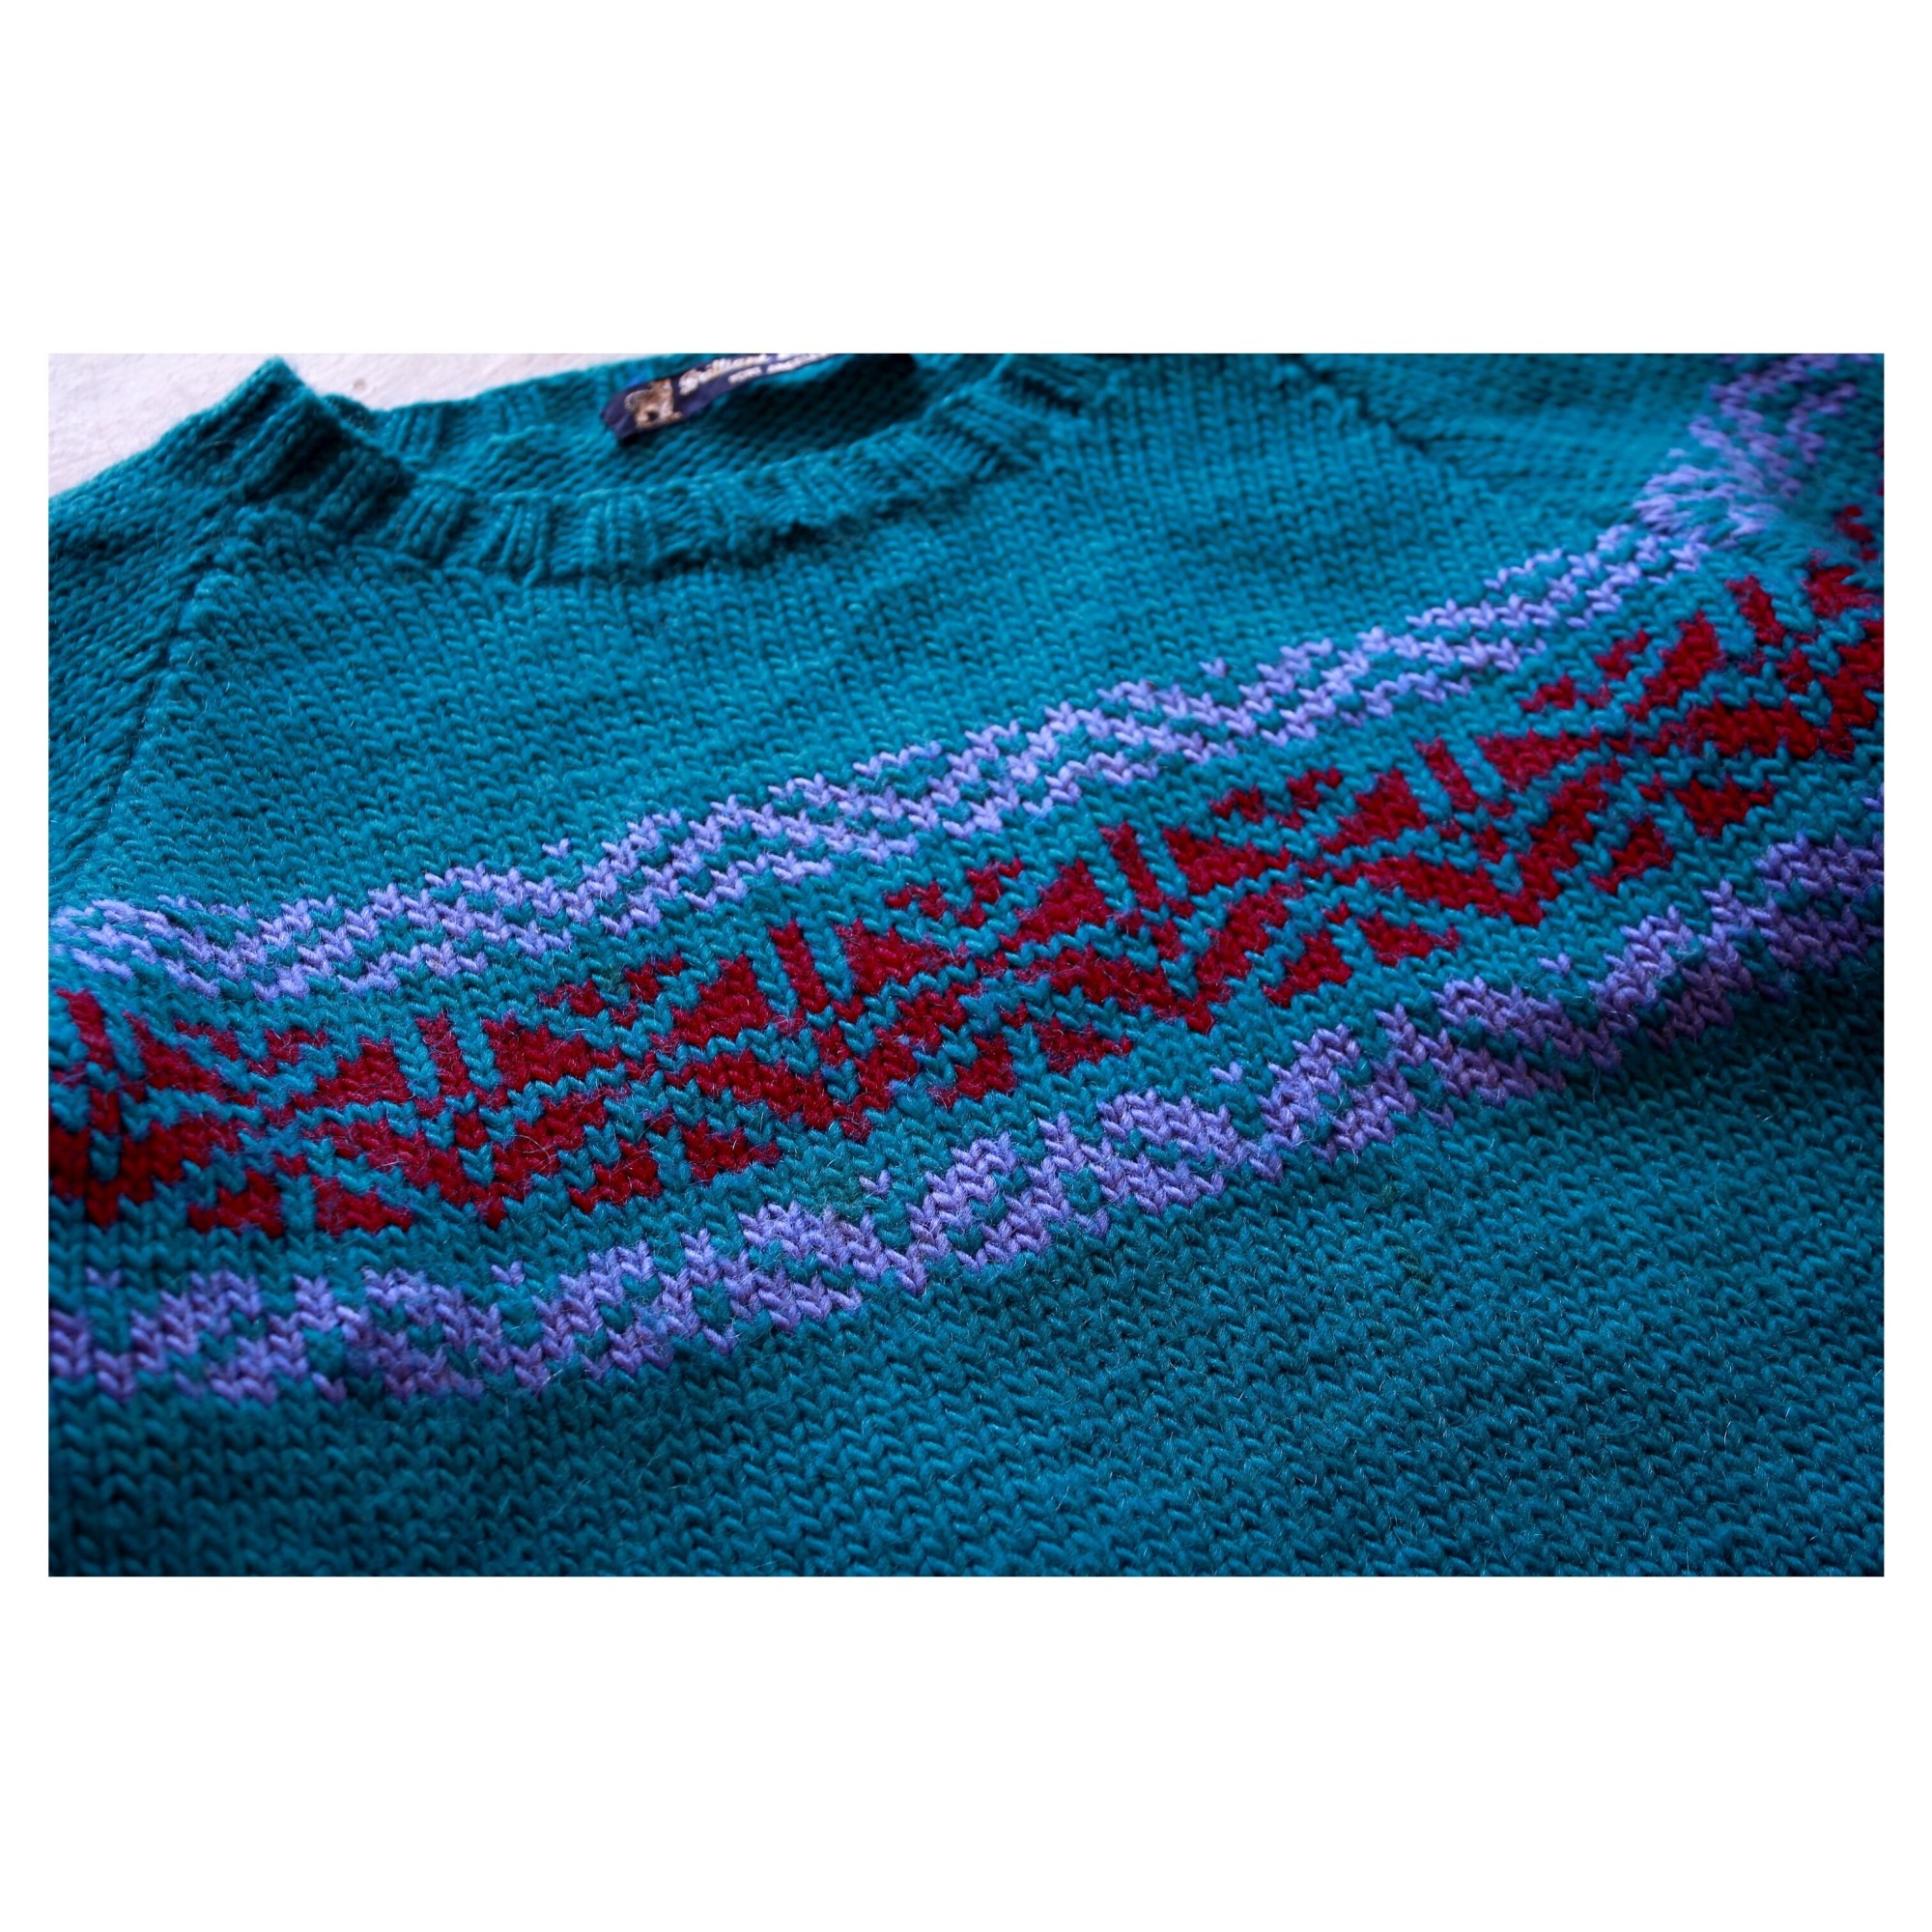 Vintage Nordic Sweater